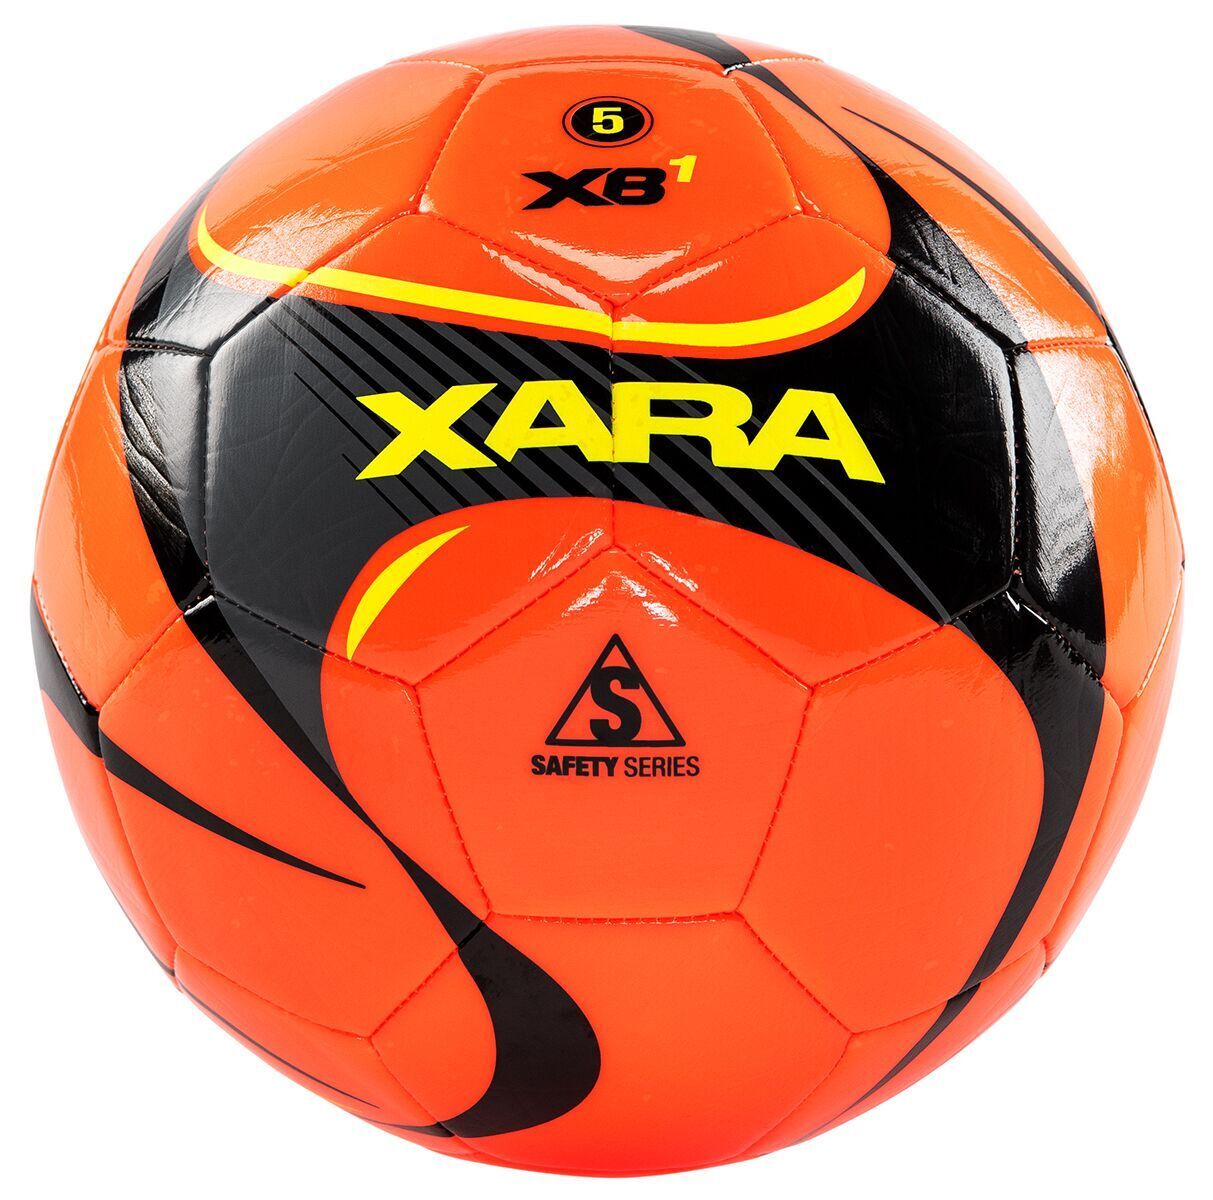 Xara XB1 V5 Soccer Ball | 8051 Soccer Ball Xara 3 Orange/Black 